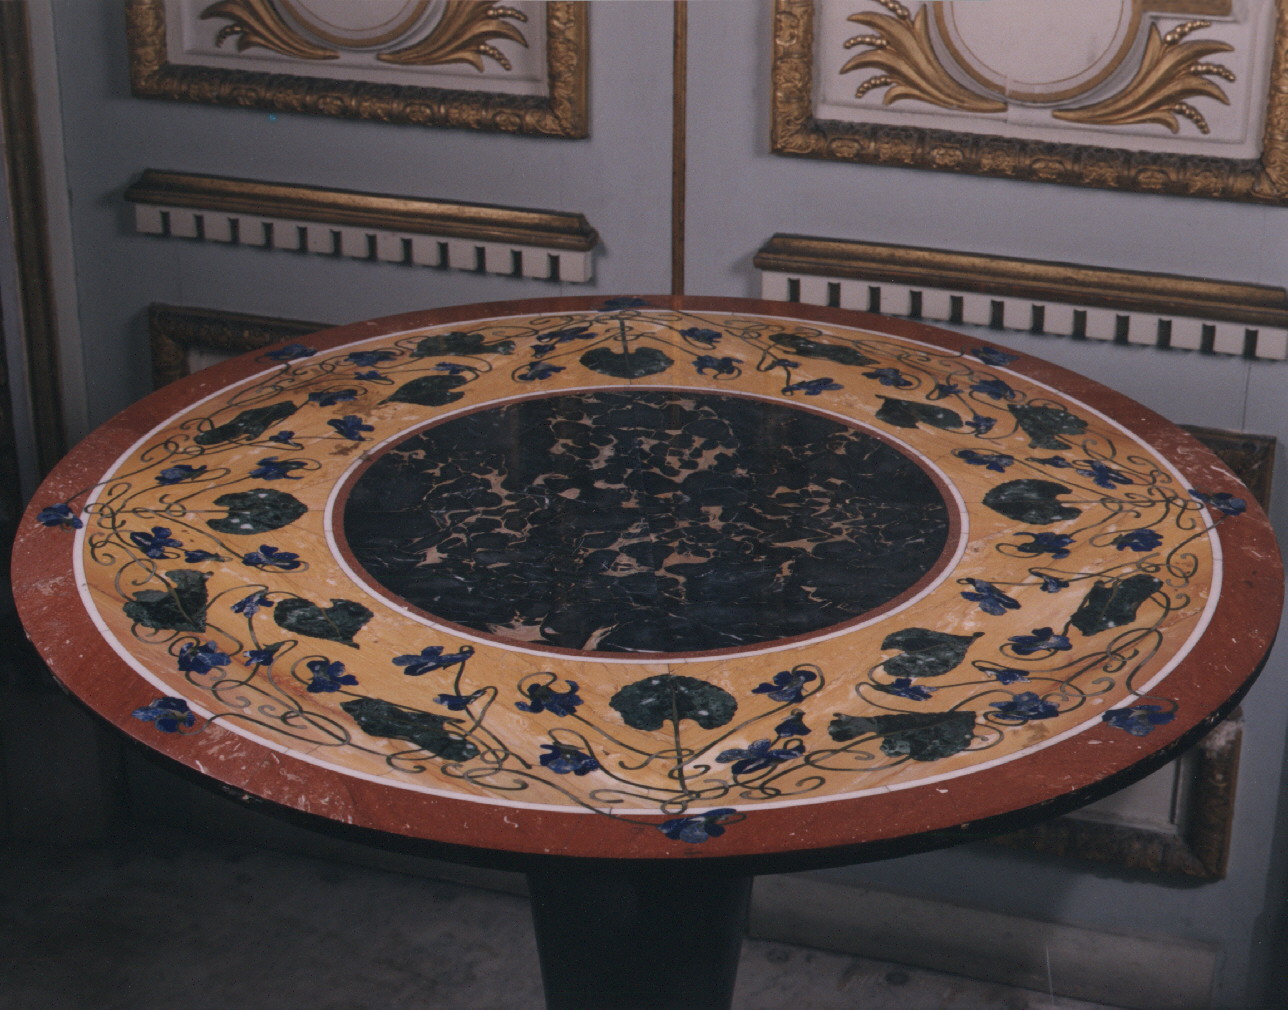 motivi decorativi vegetali (tavolo) - bottega fiorentina (ultimo quarto sec. XVII)